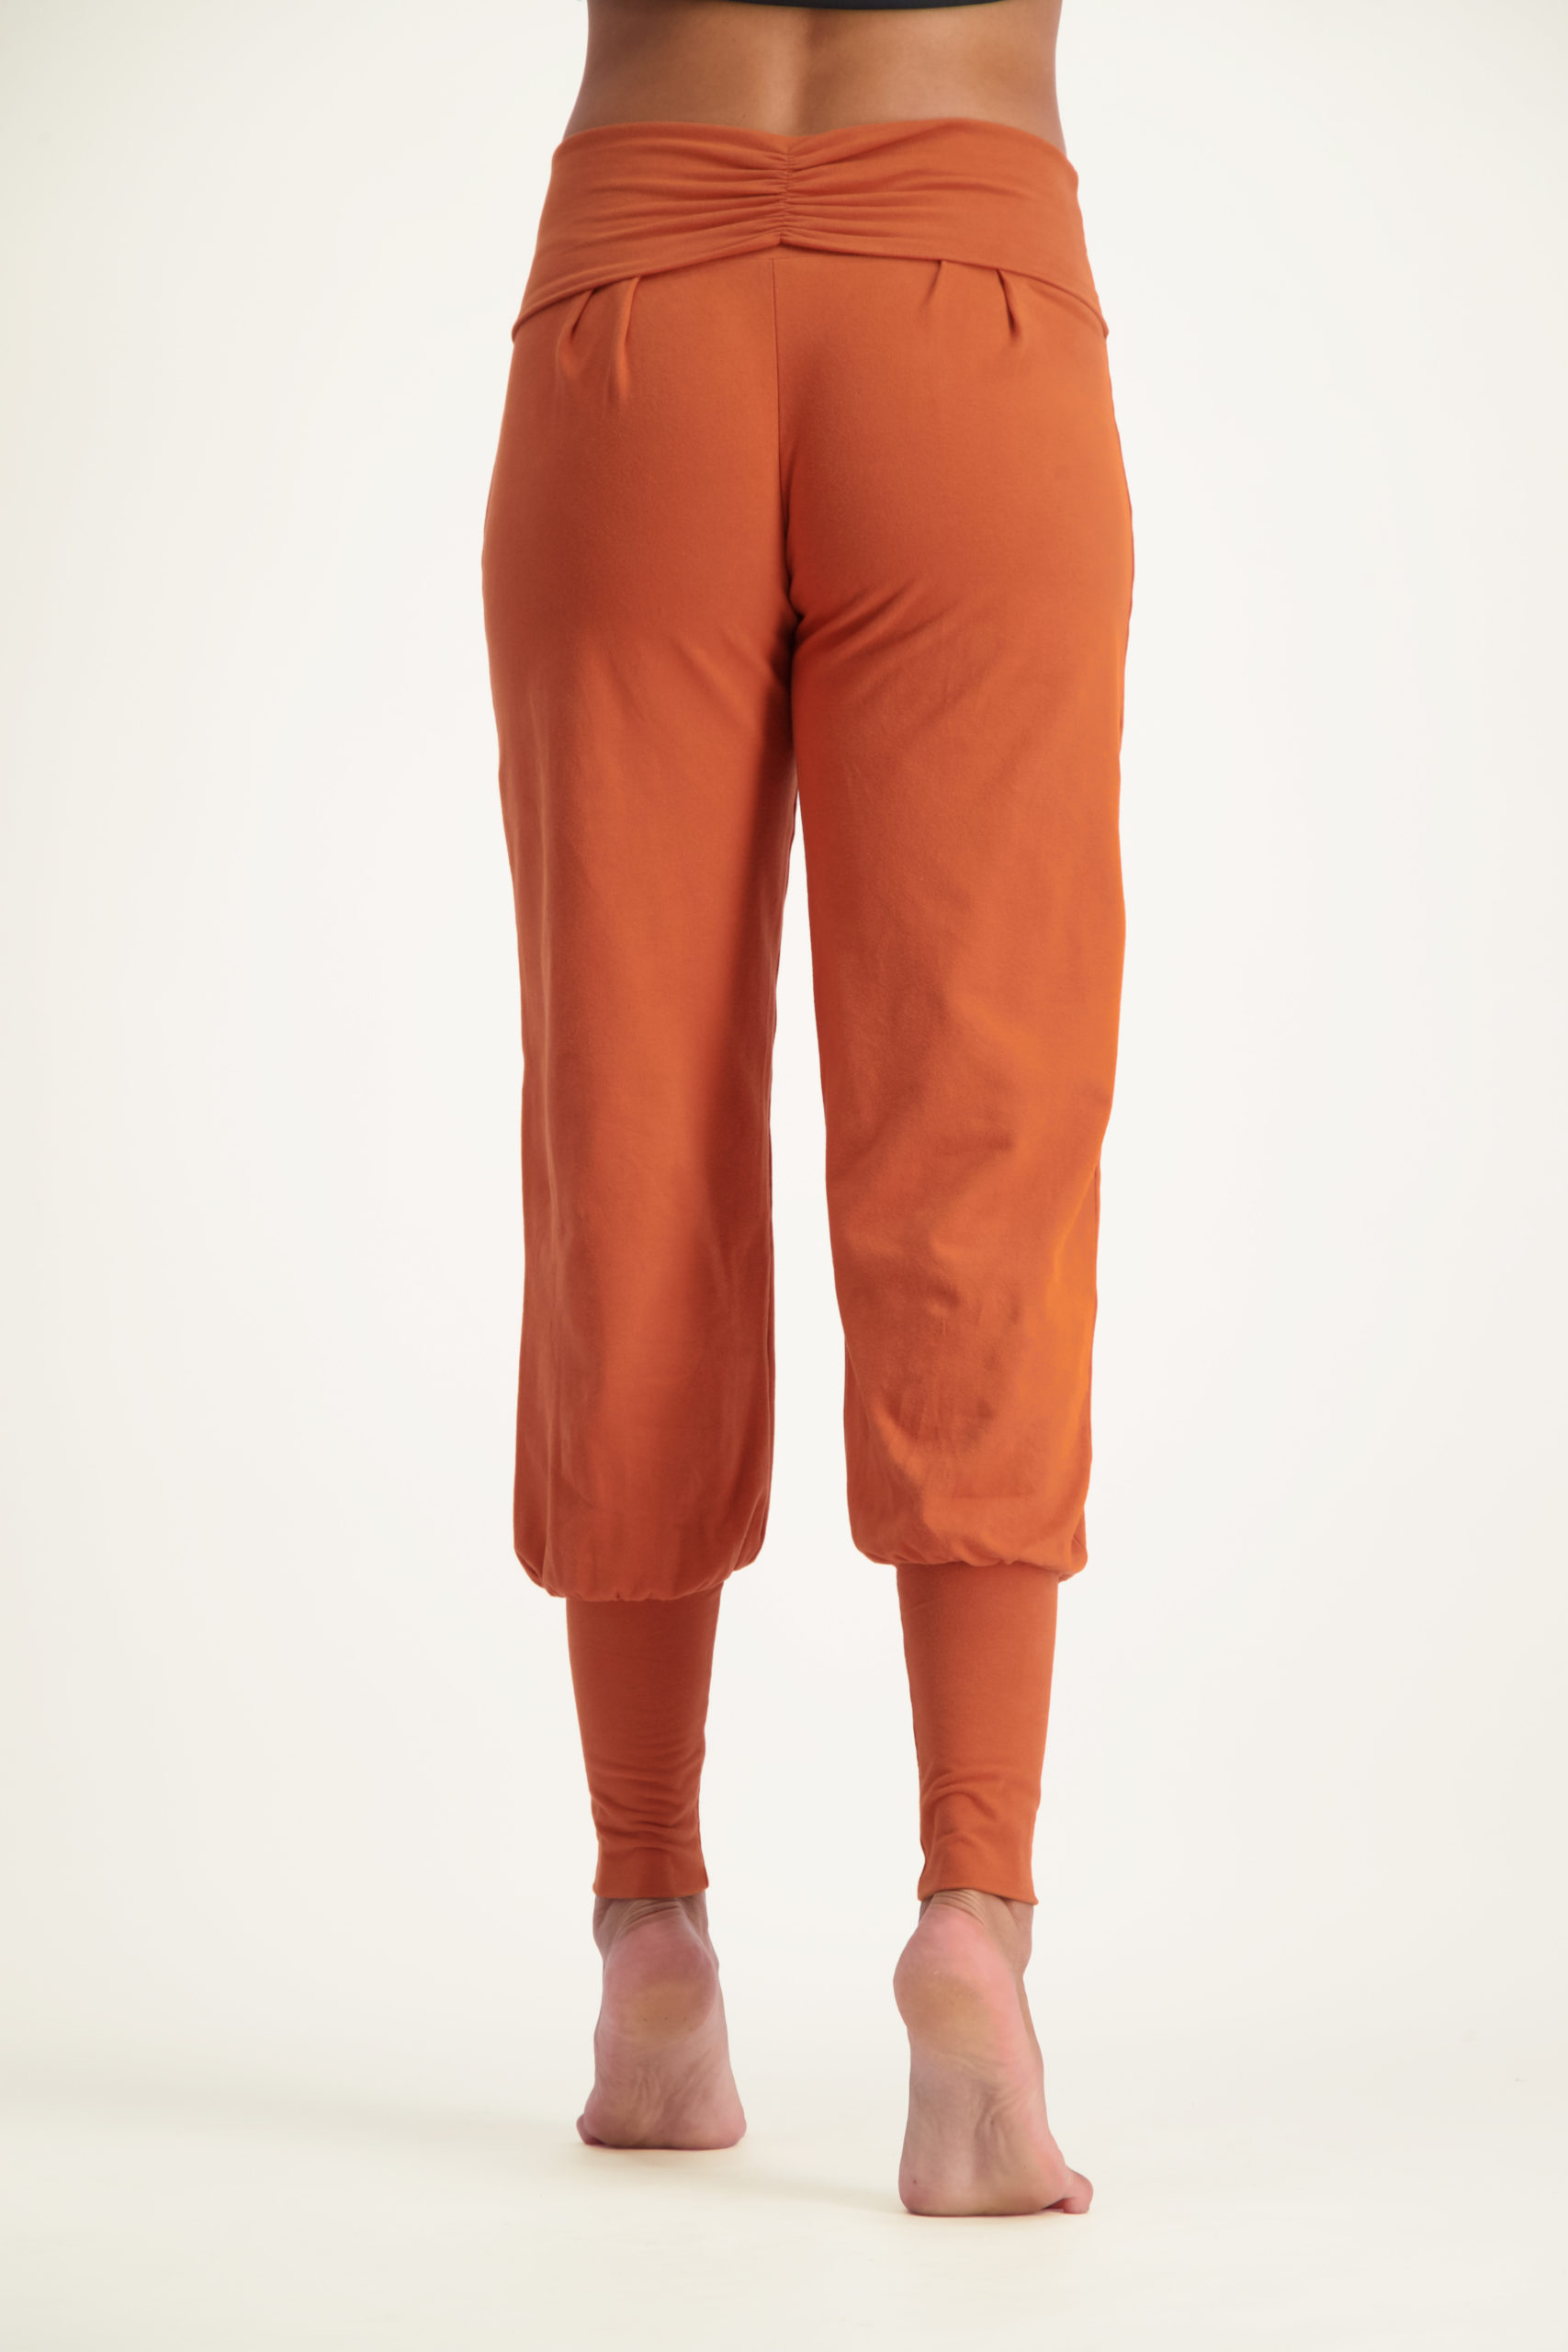 Devi pants-Bombay brown-11265539-front-model_Fullbody_TIFF_6